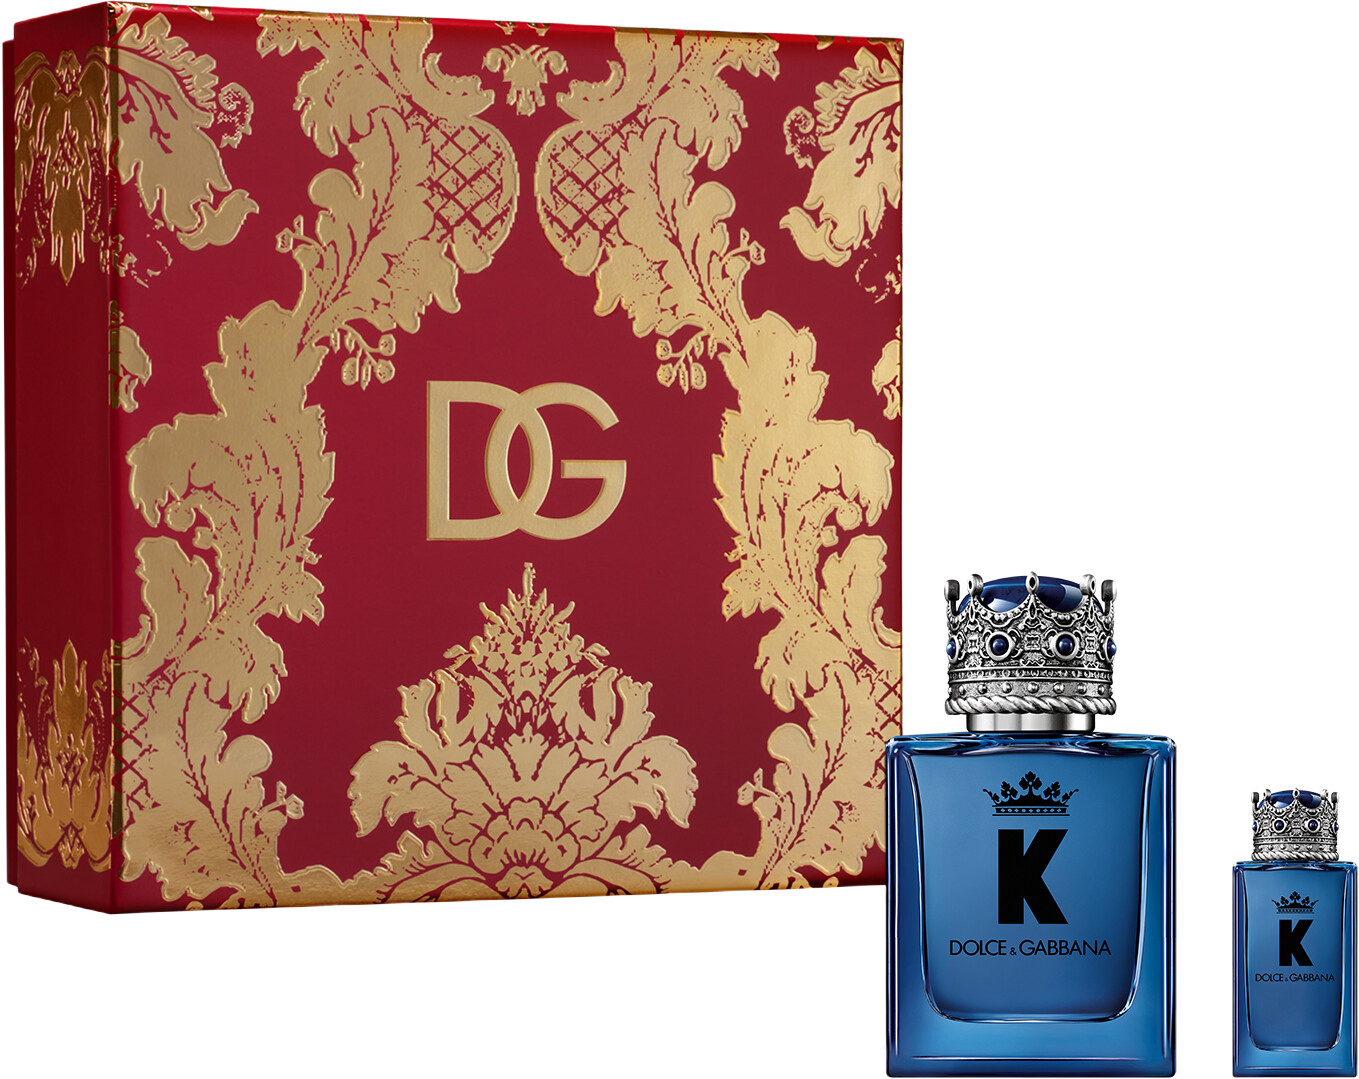 Dolce & Gabbana K By Dolce & Gabbana Eau de Parfum Spray 50ml Gift Set